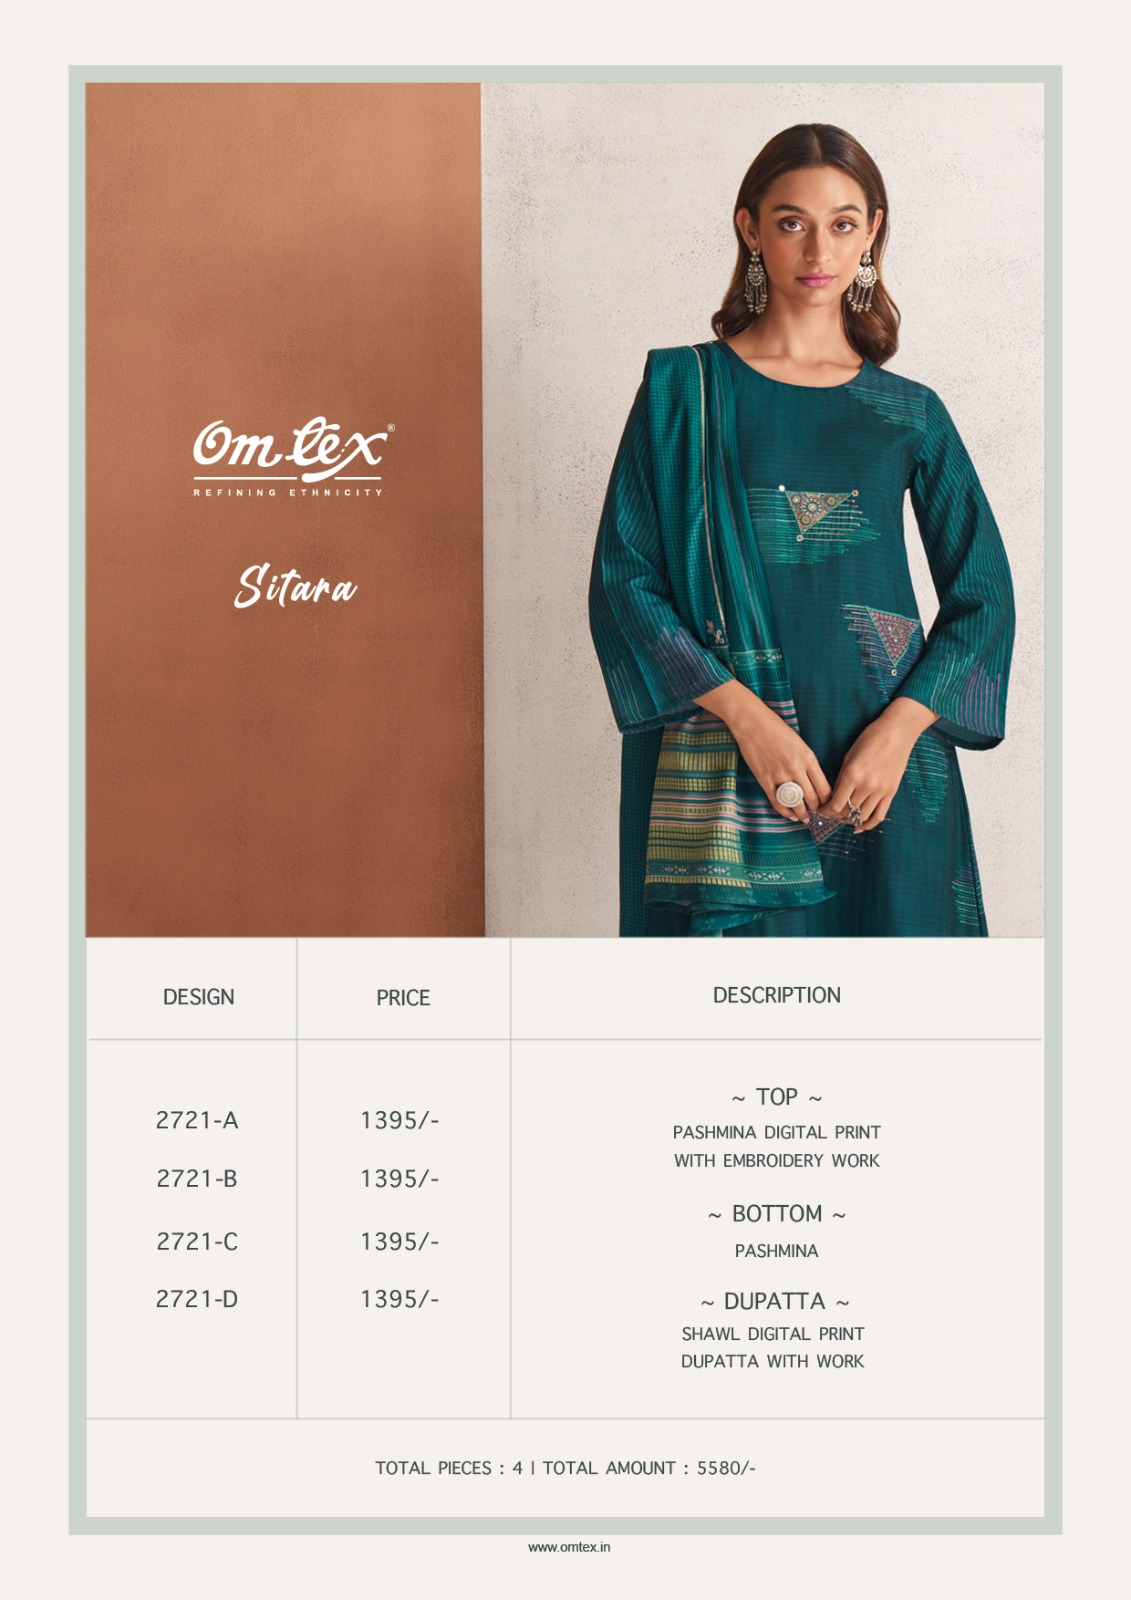 Omtex Sitara collection 5